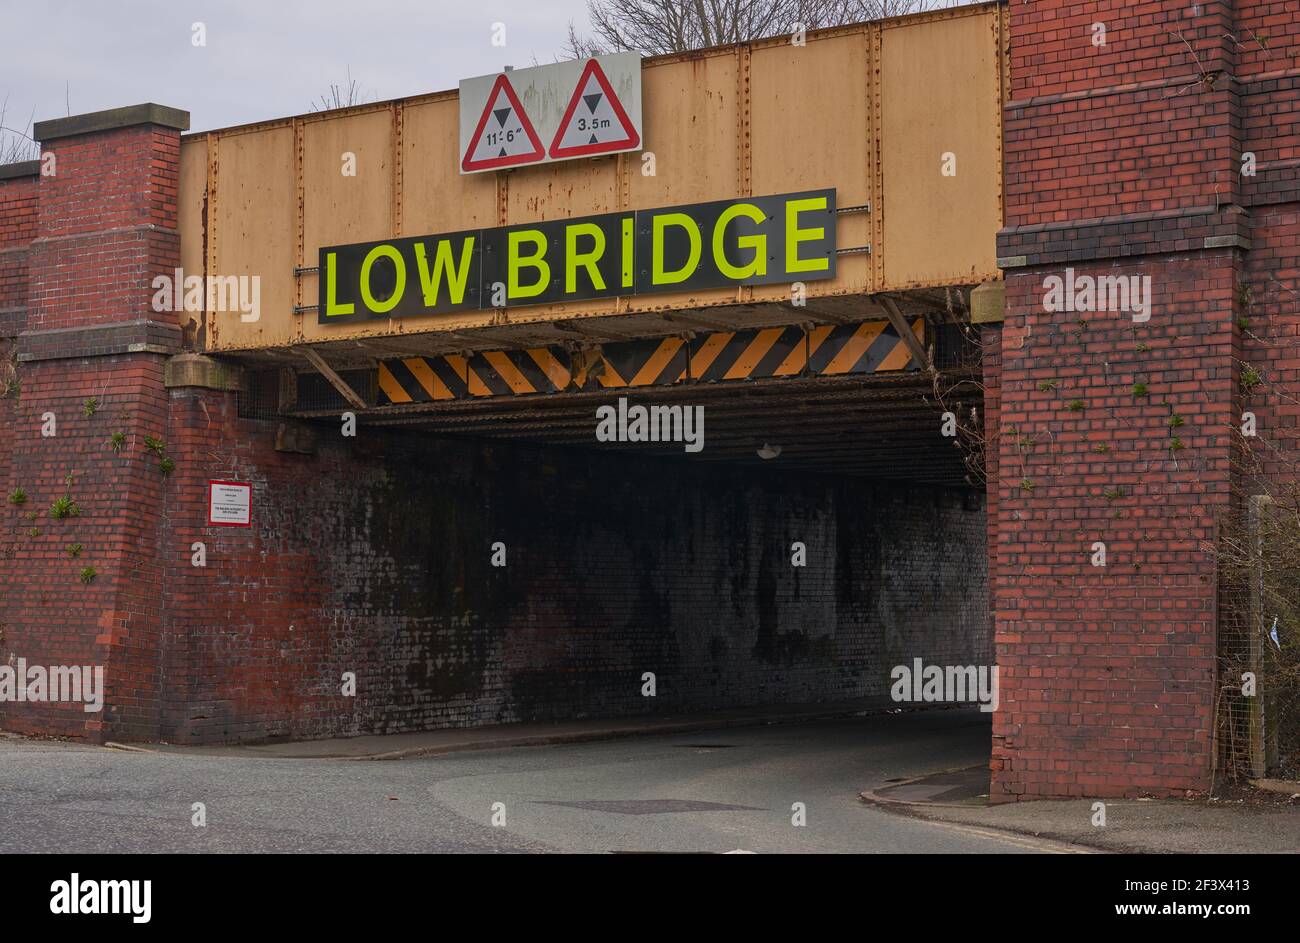 Low railway bridge over road in Manchester Stock Photo